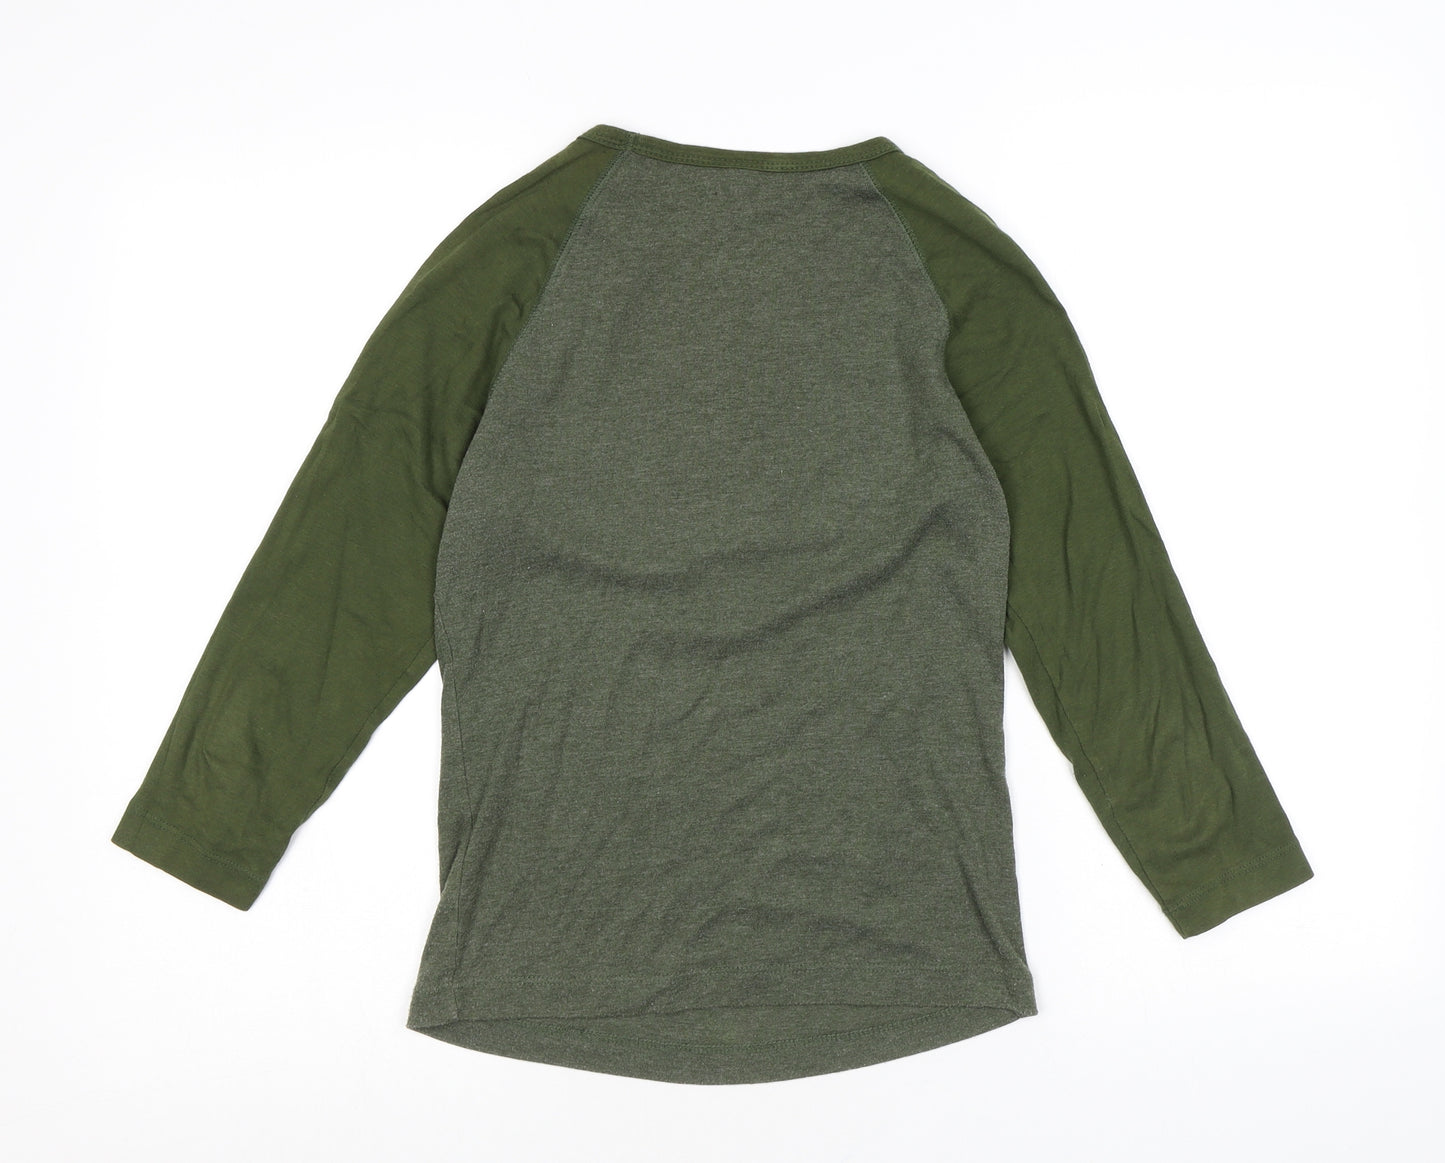 ROXY Womens Green Cotton Basic T-Shirt Size M Round Neck - Palm Tree